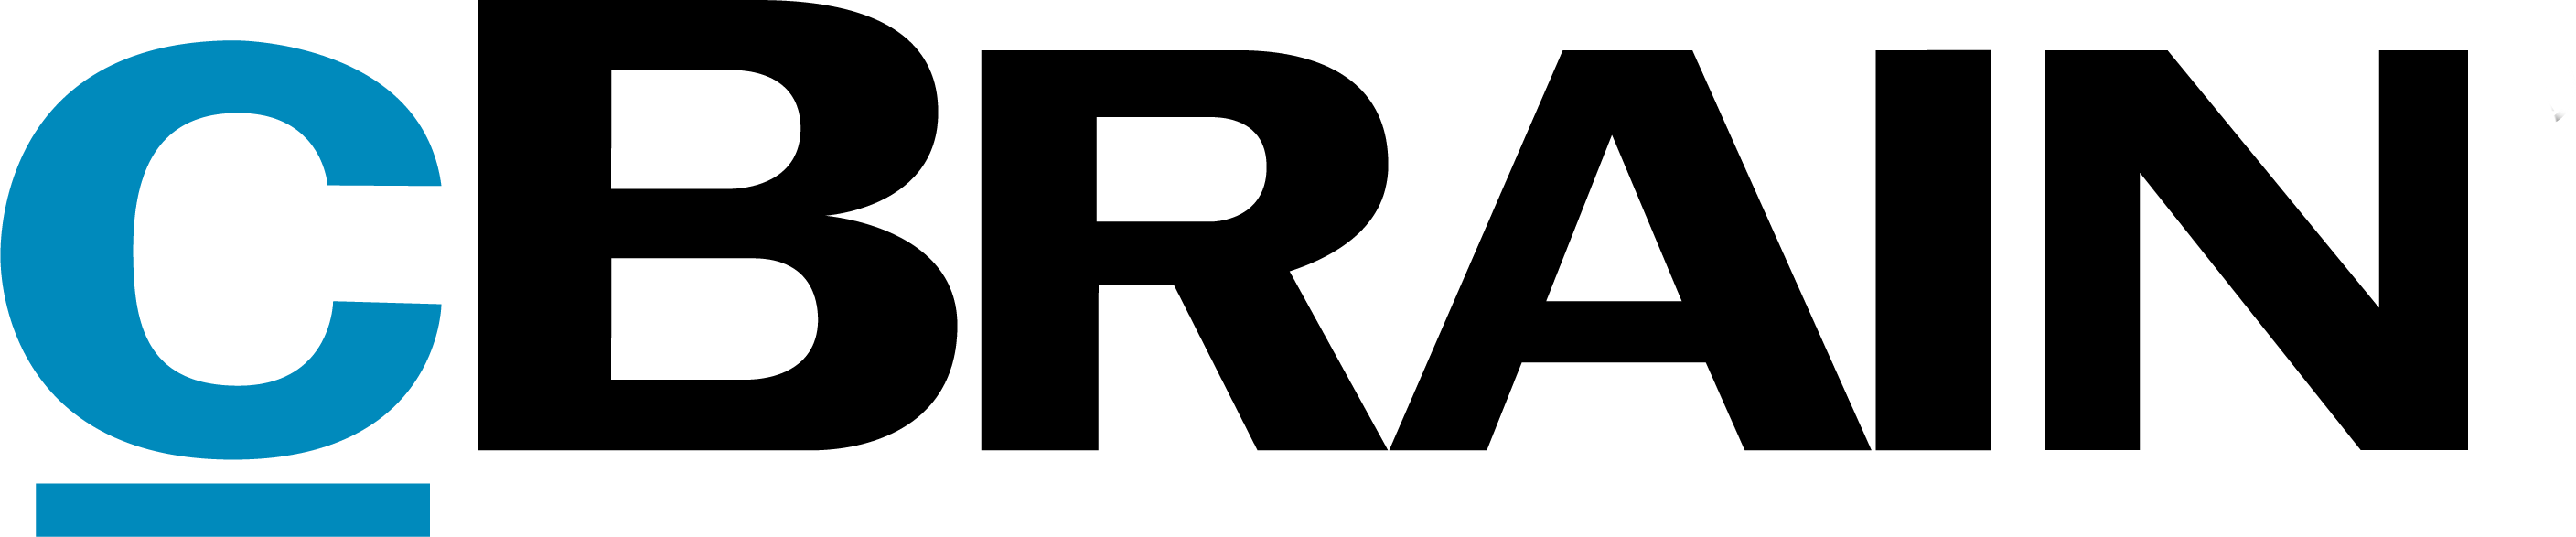 cBrains logo